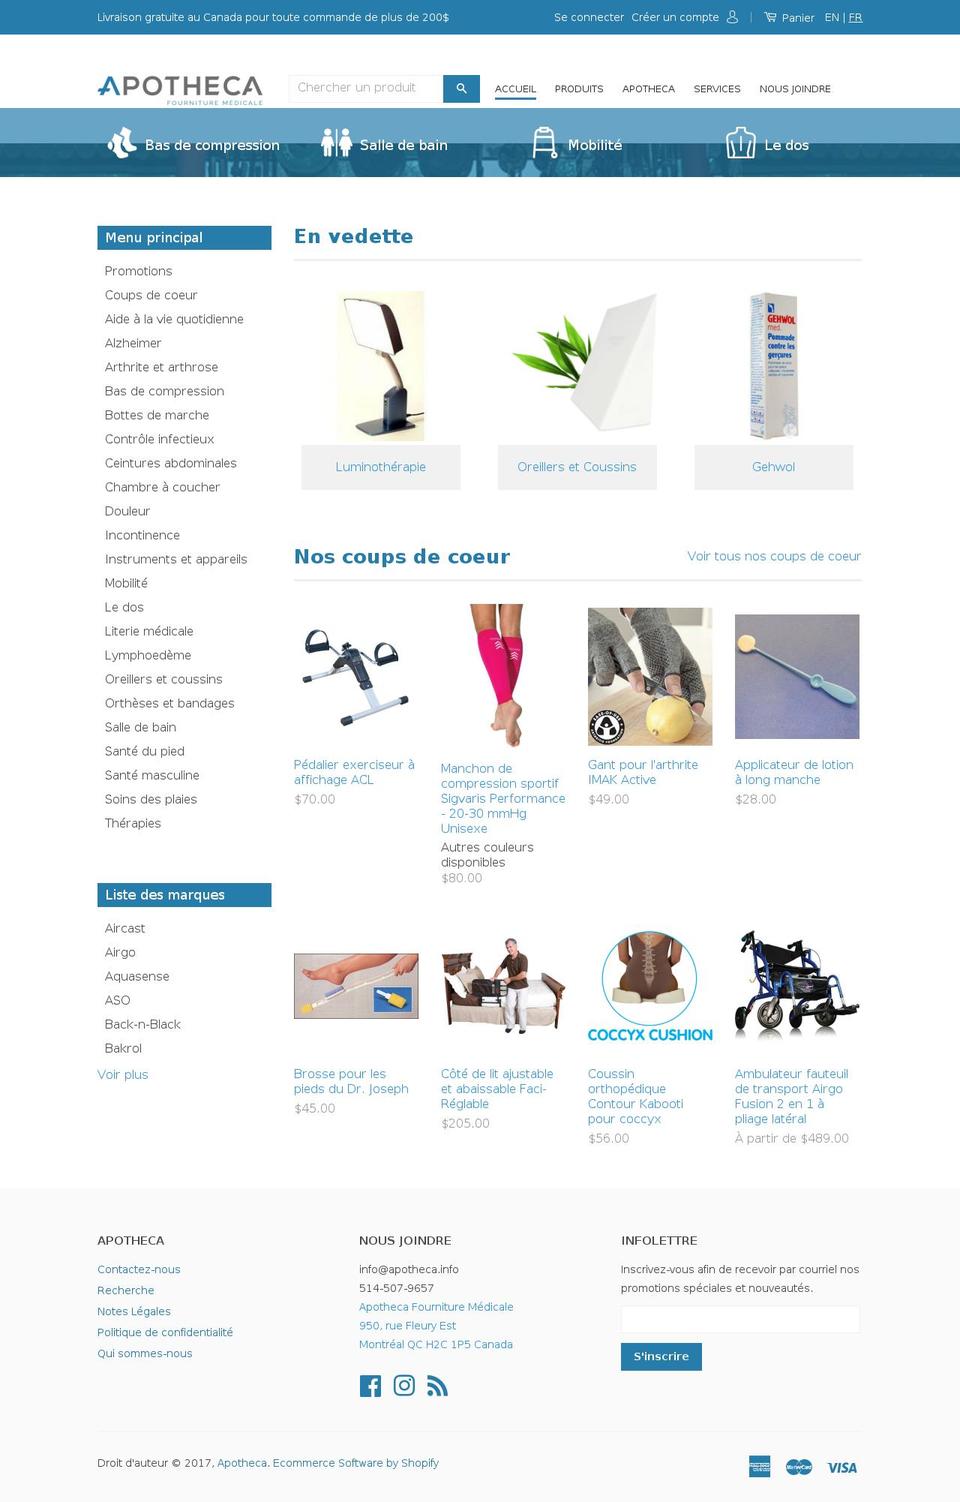 Apotheca-Nectar Shopify theme site example apotheca.info